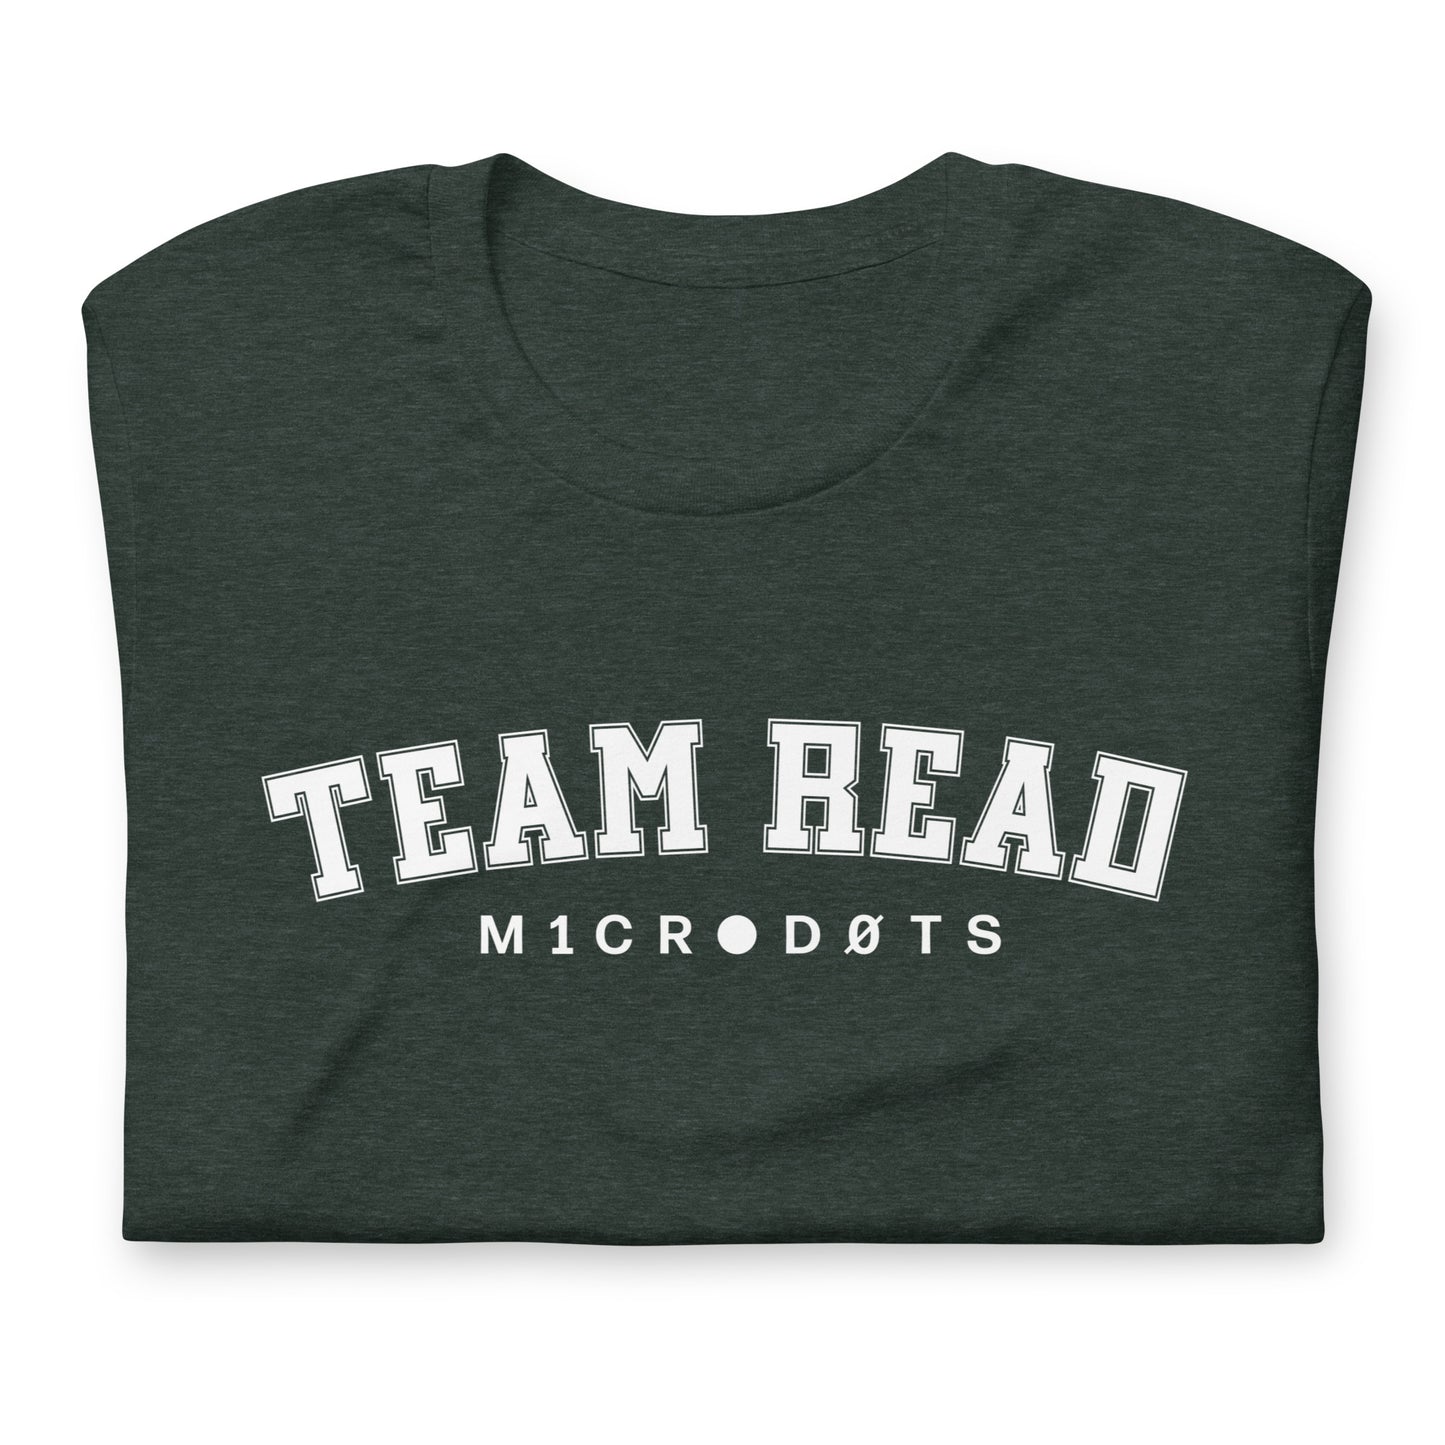 Microdots "Team Read" Design - Unisex t-shirt